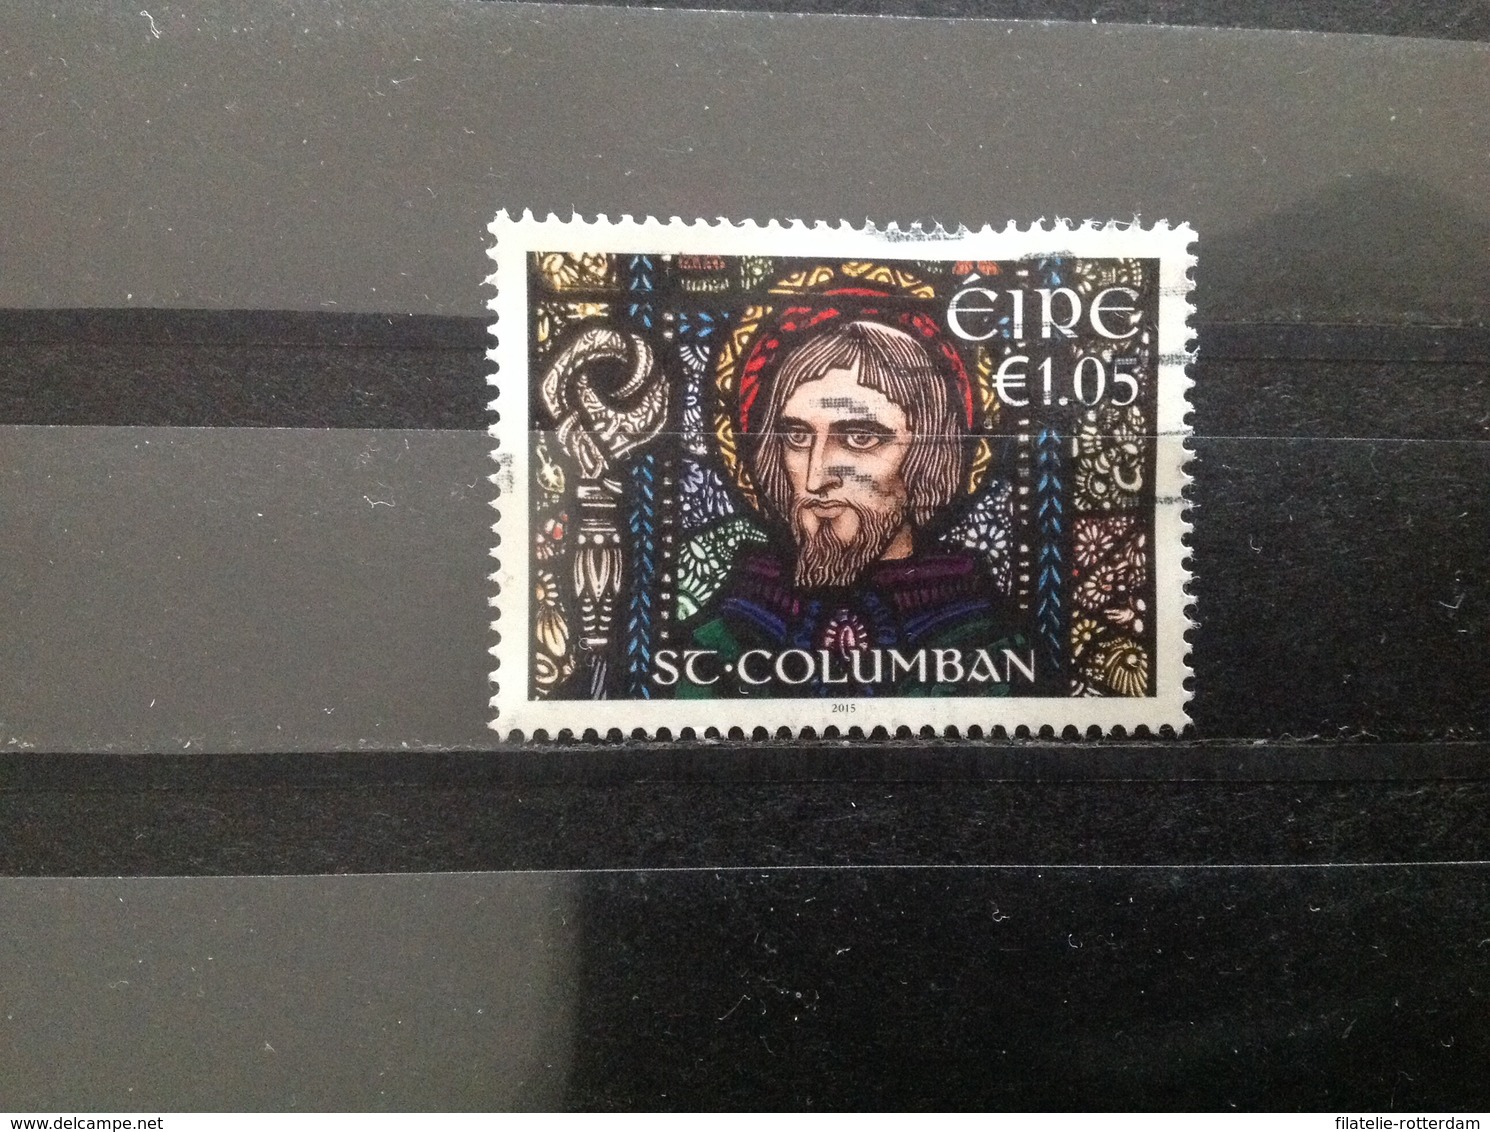 Ierland / Ireland - Sterfdag St. Columban (1.05) 2015 - Usati